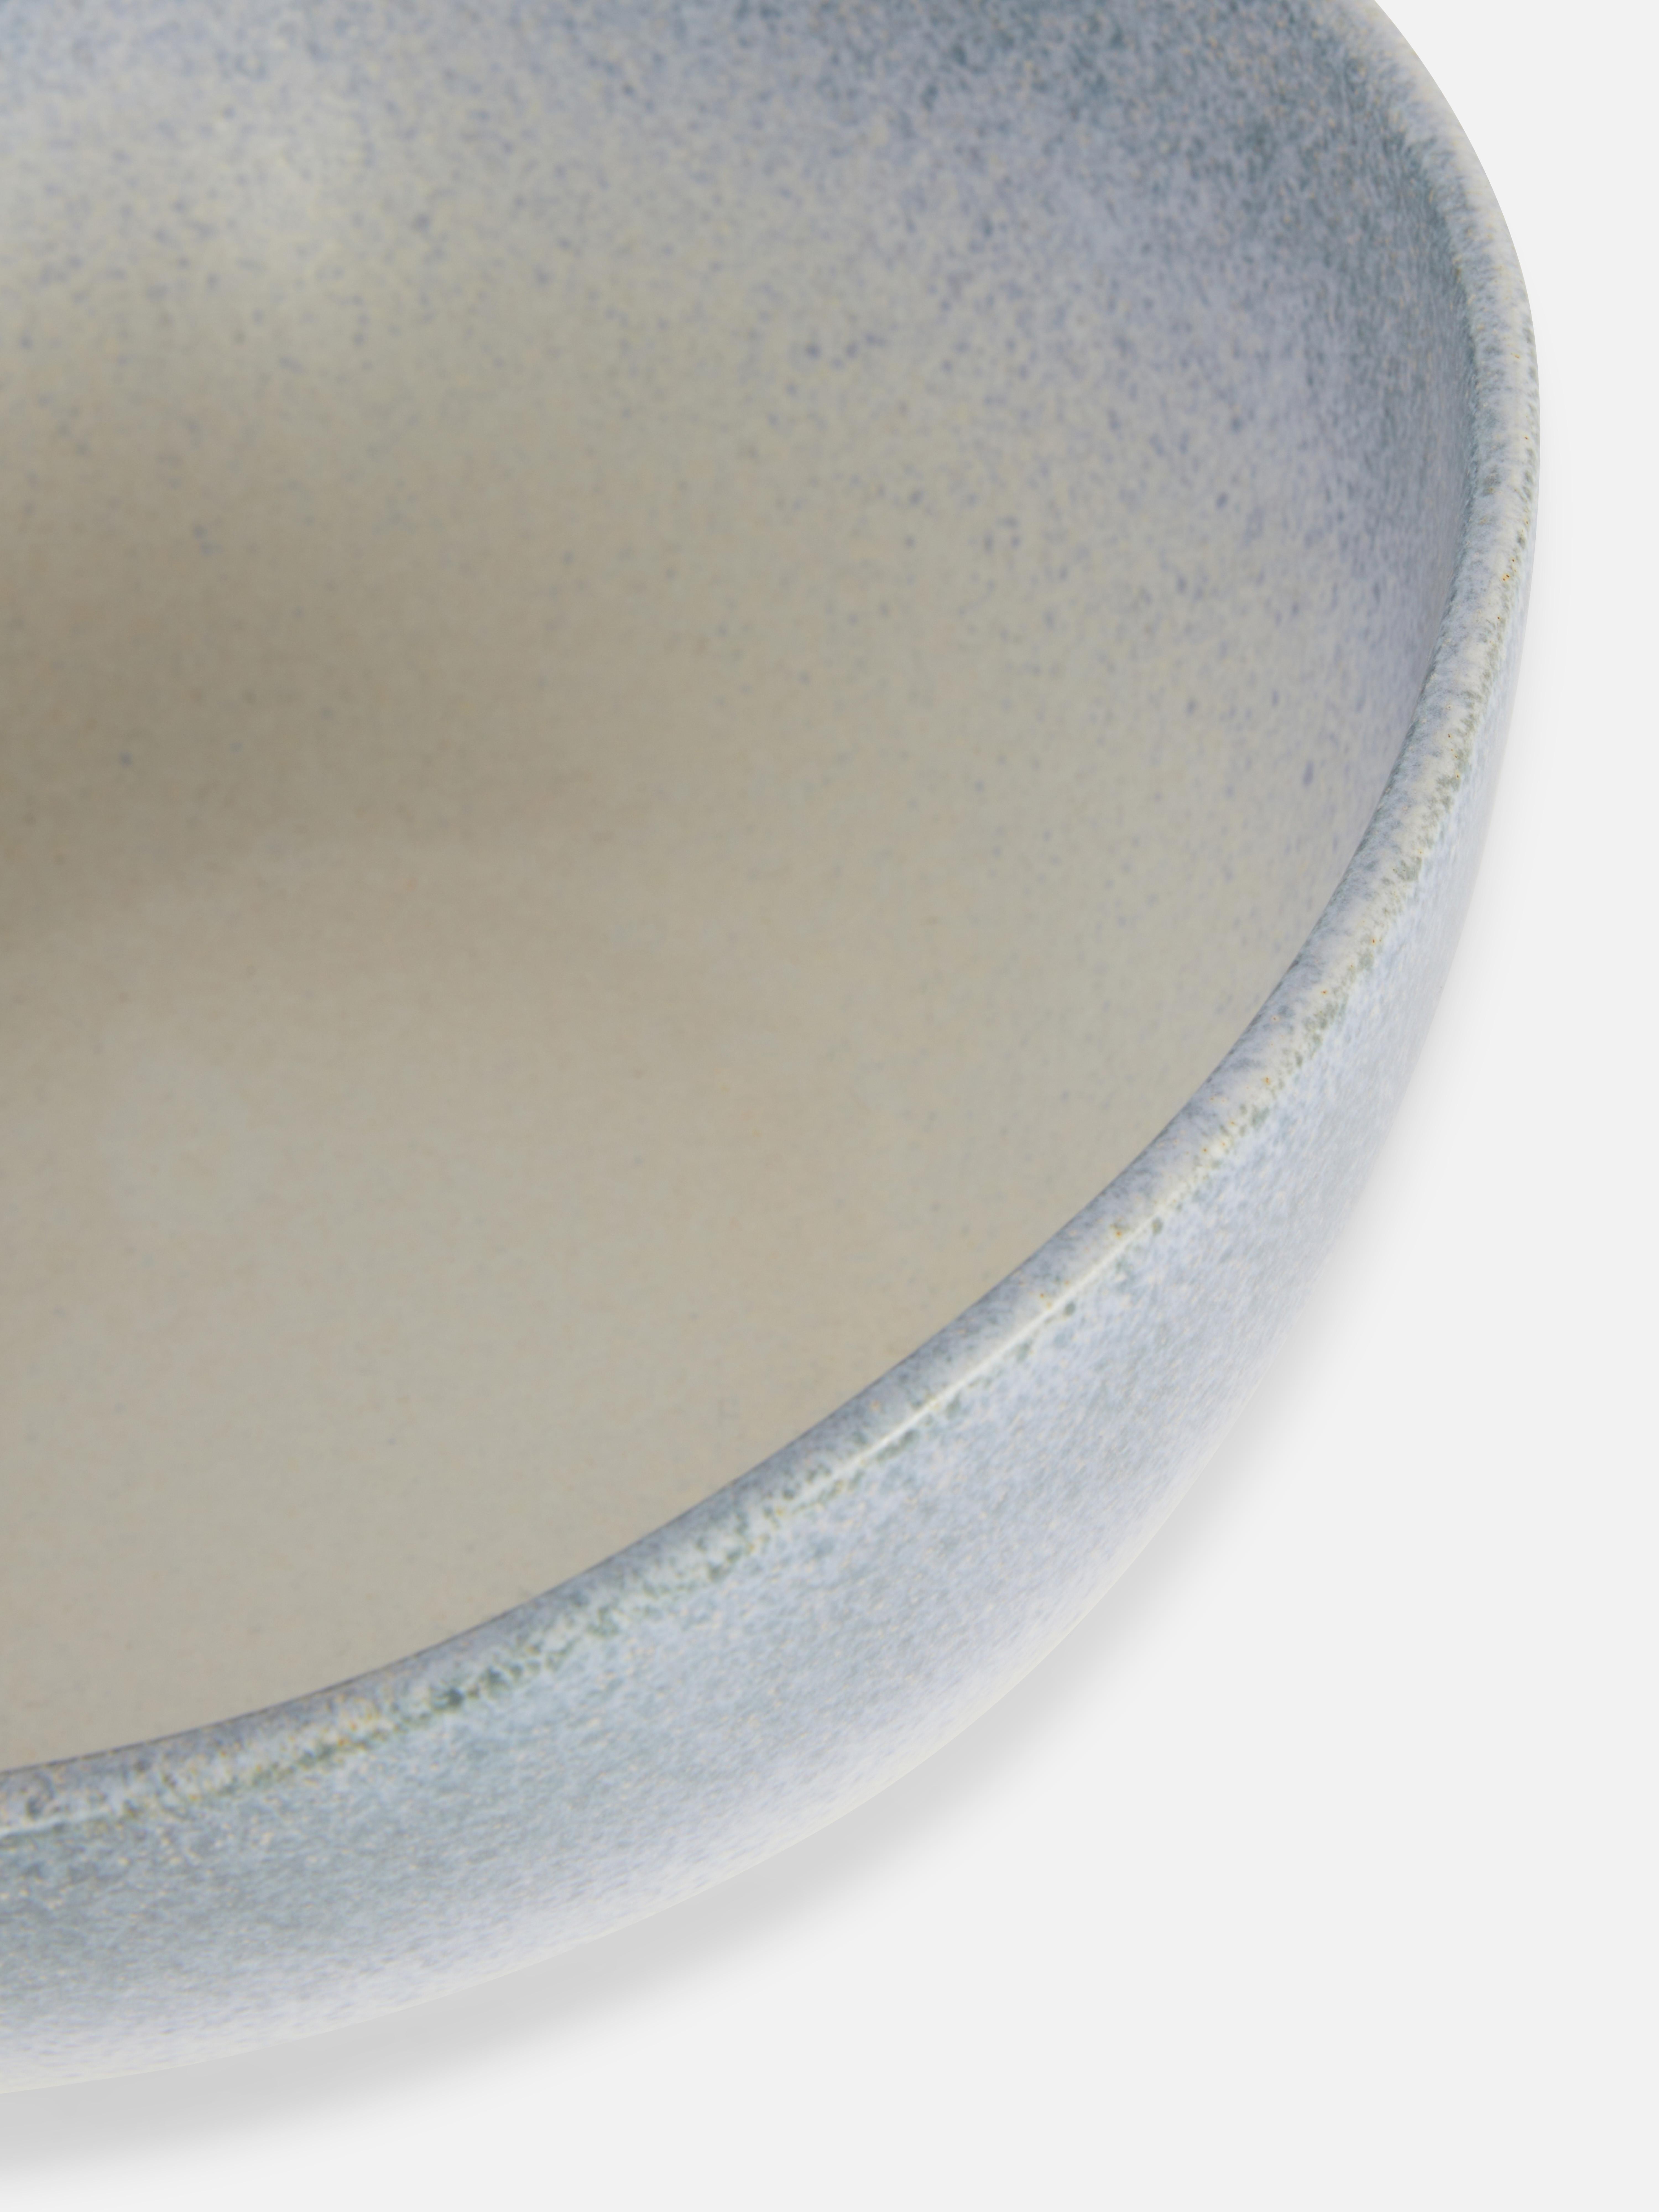 Ceramic Ombre Serving Bowl